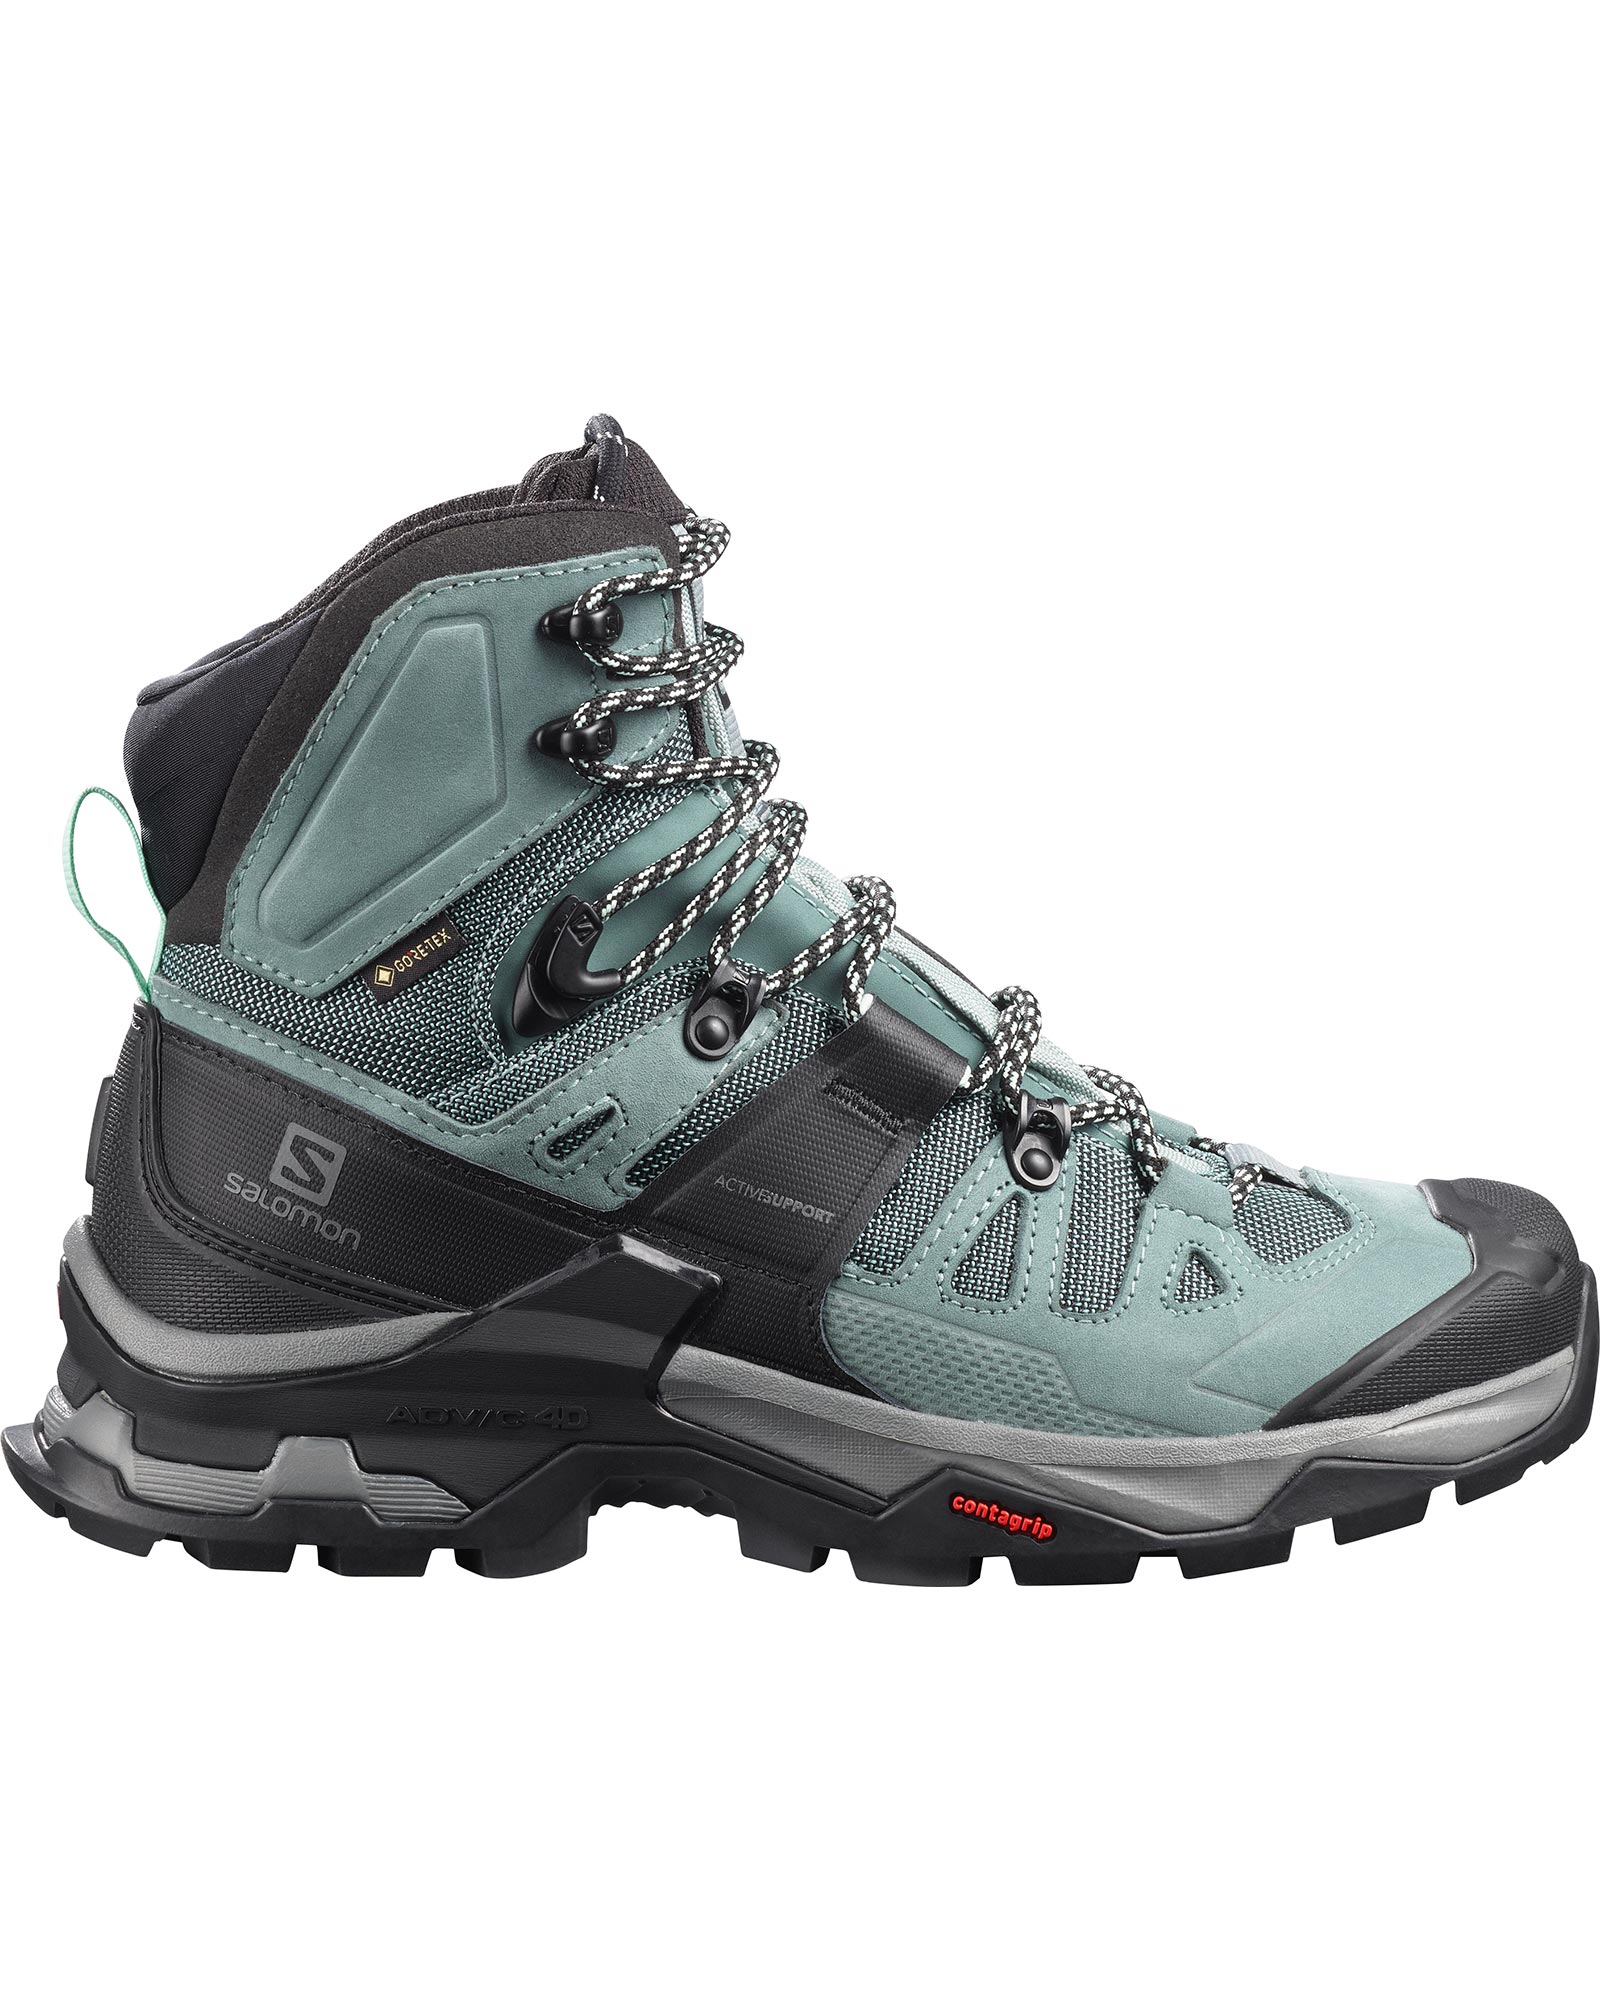 Salomon Quest 4D 4 GORE TEX Women’s Boots - Slate/Trooper/Opal Blue UK 8